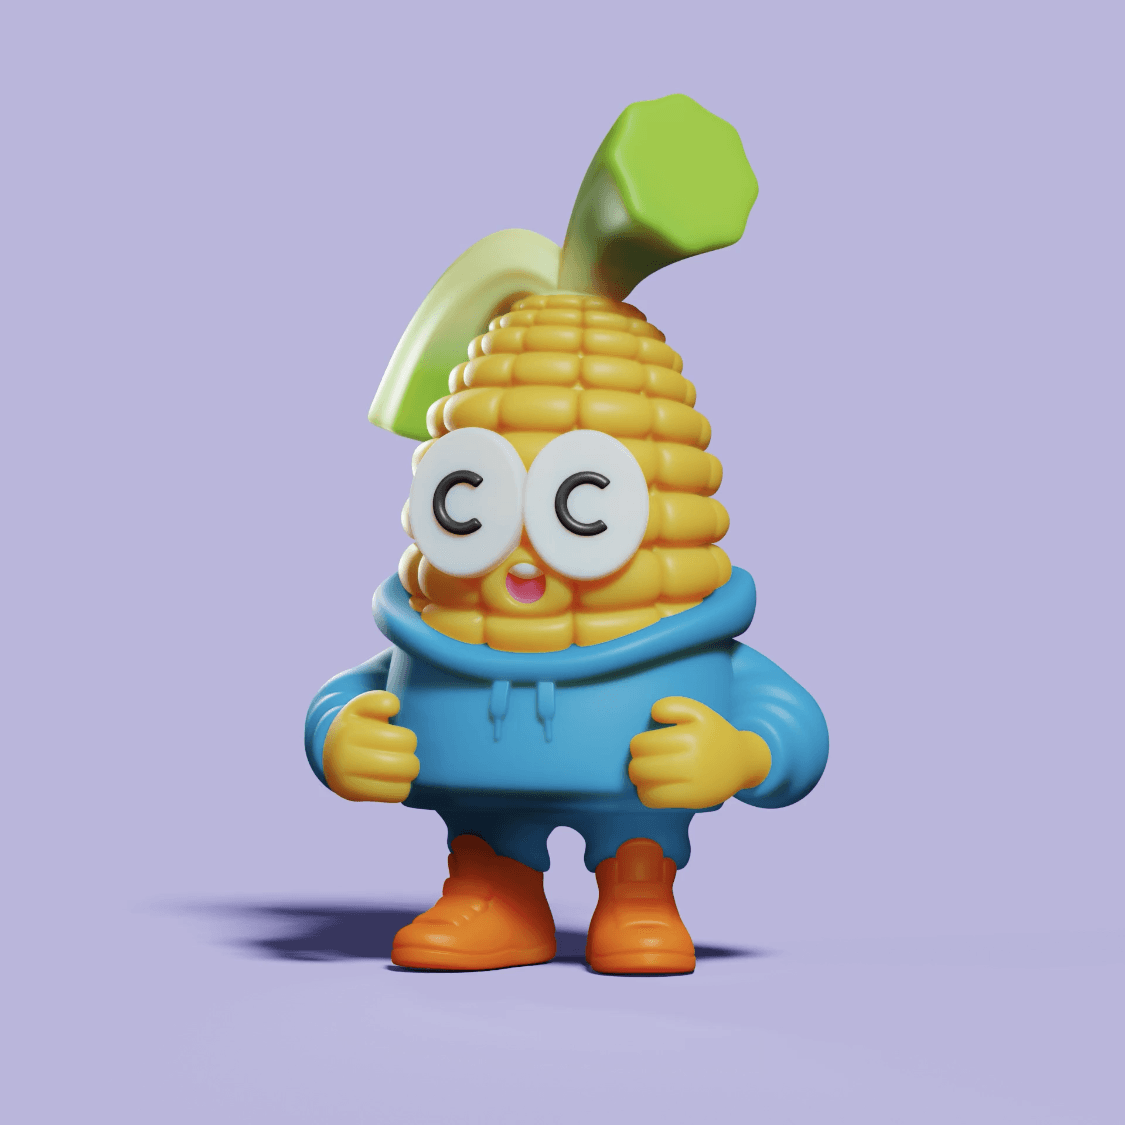 Lily (Corn girl)